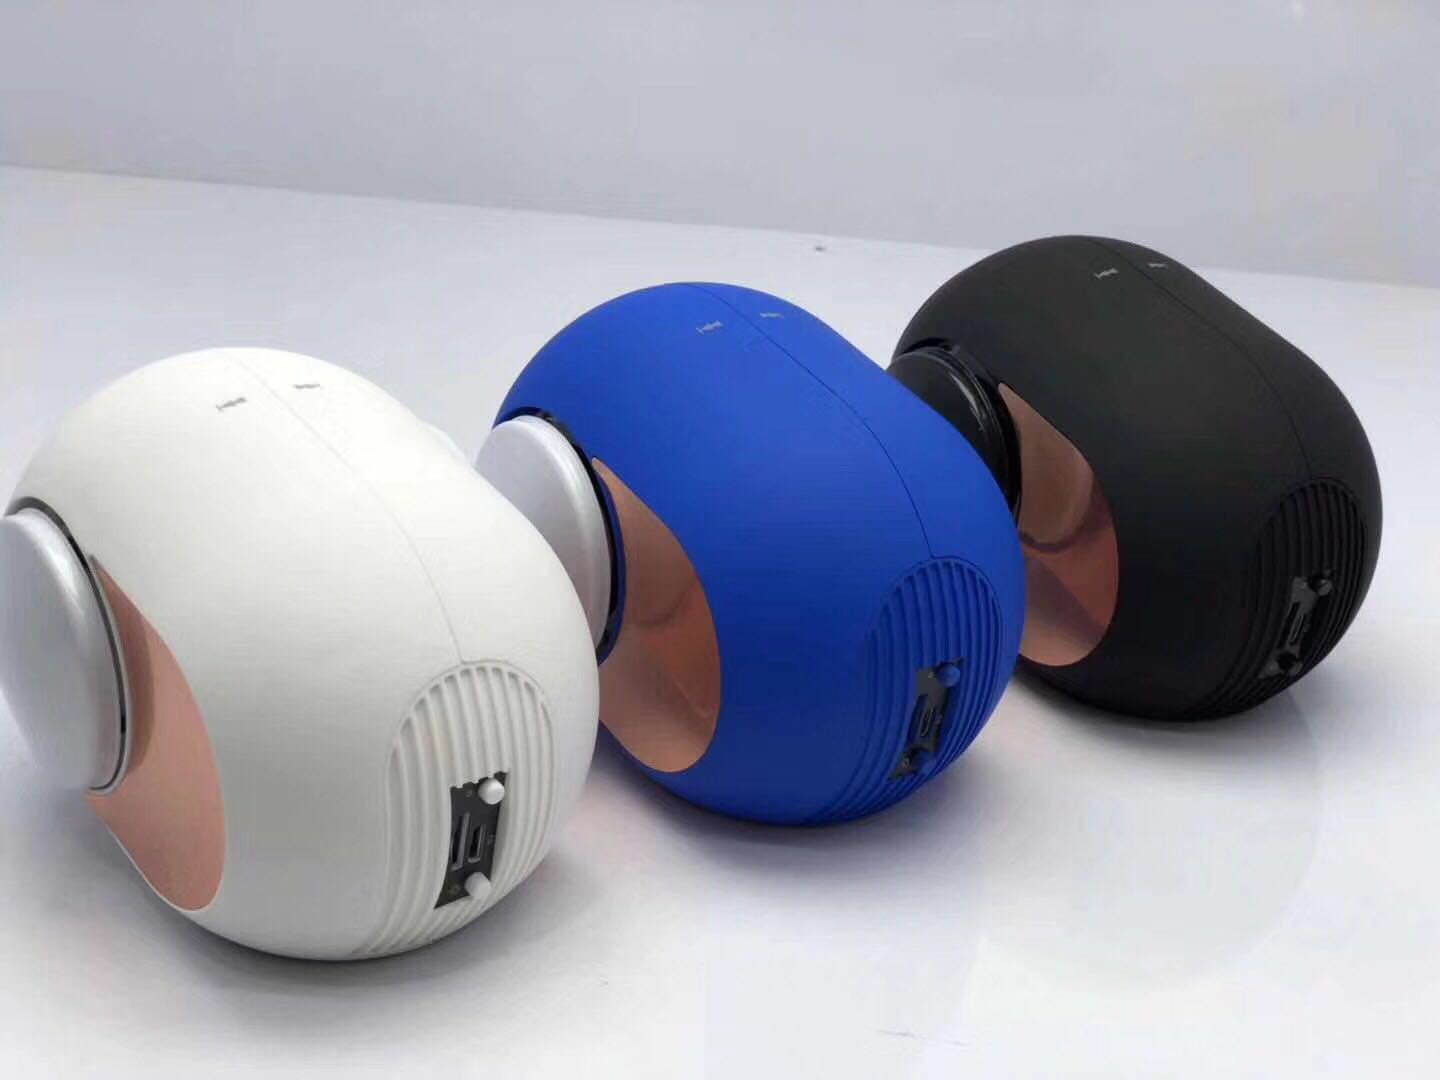 Small golden egg wireless bluetooth speaker